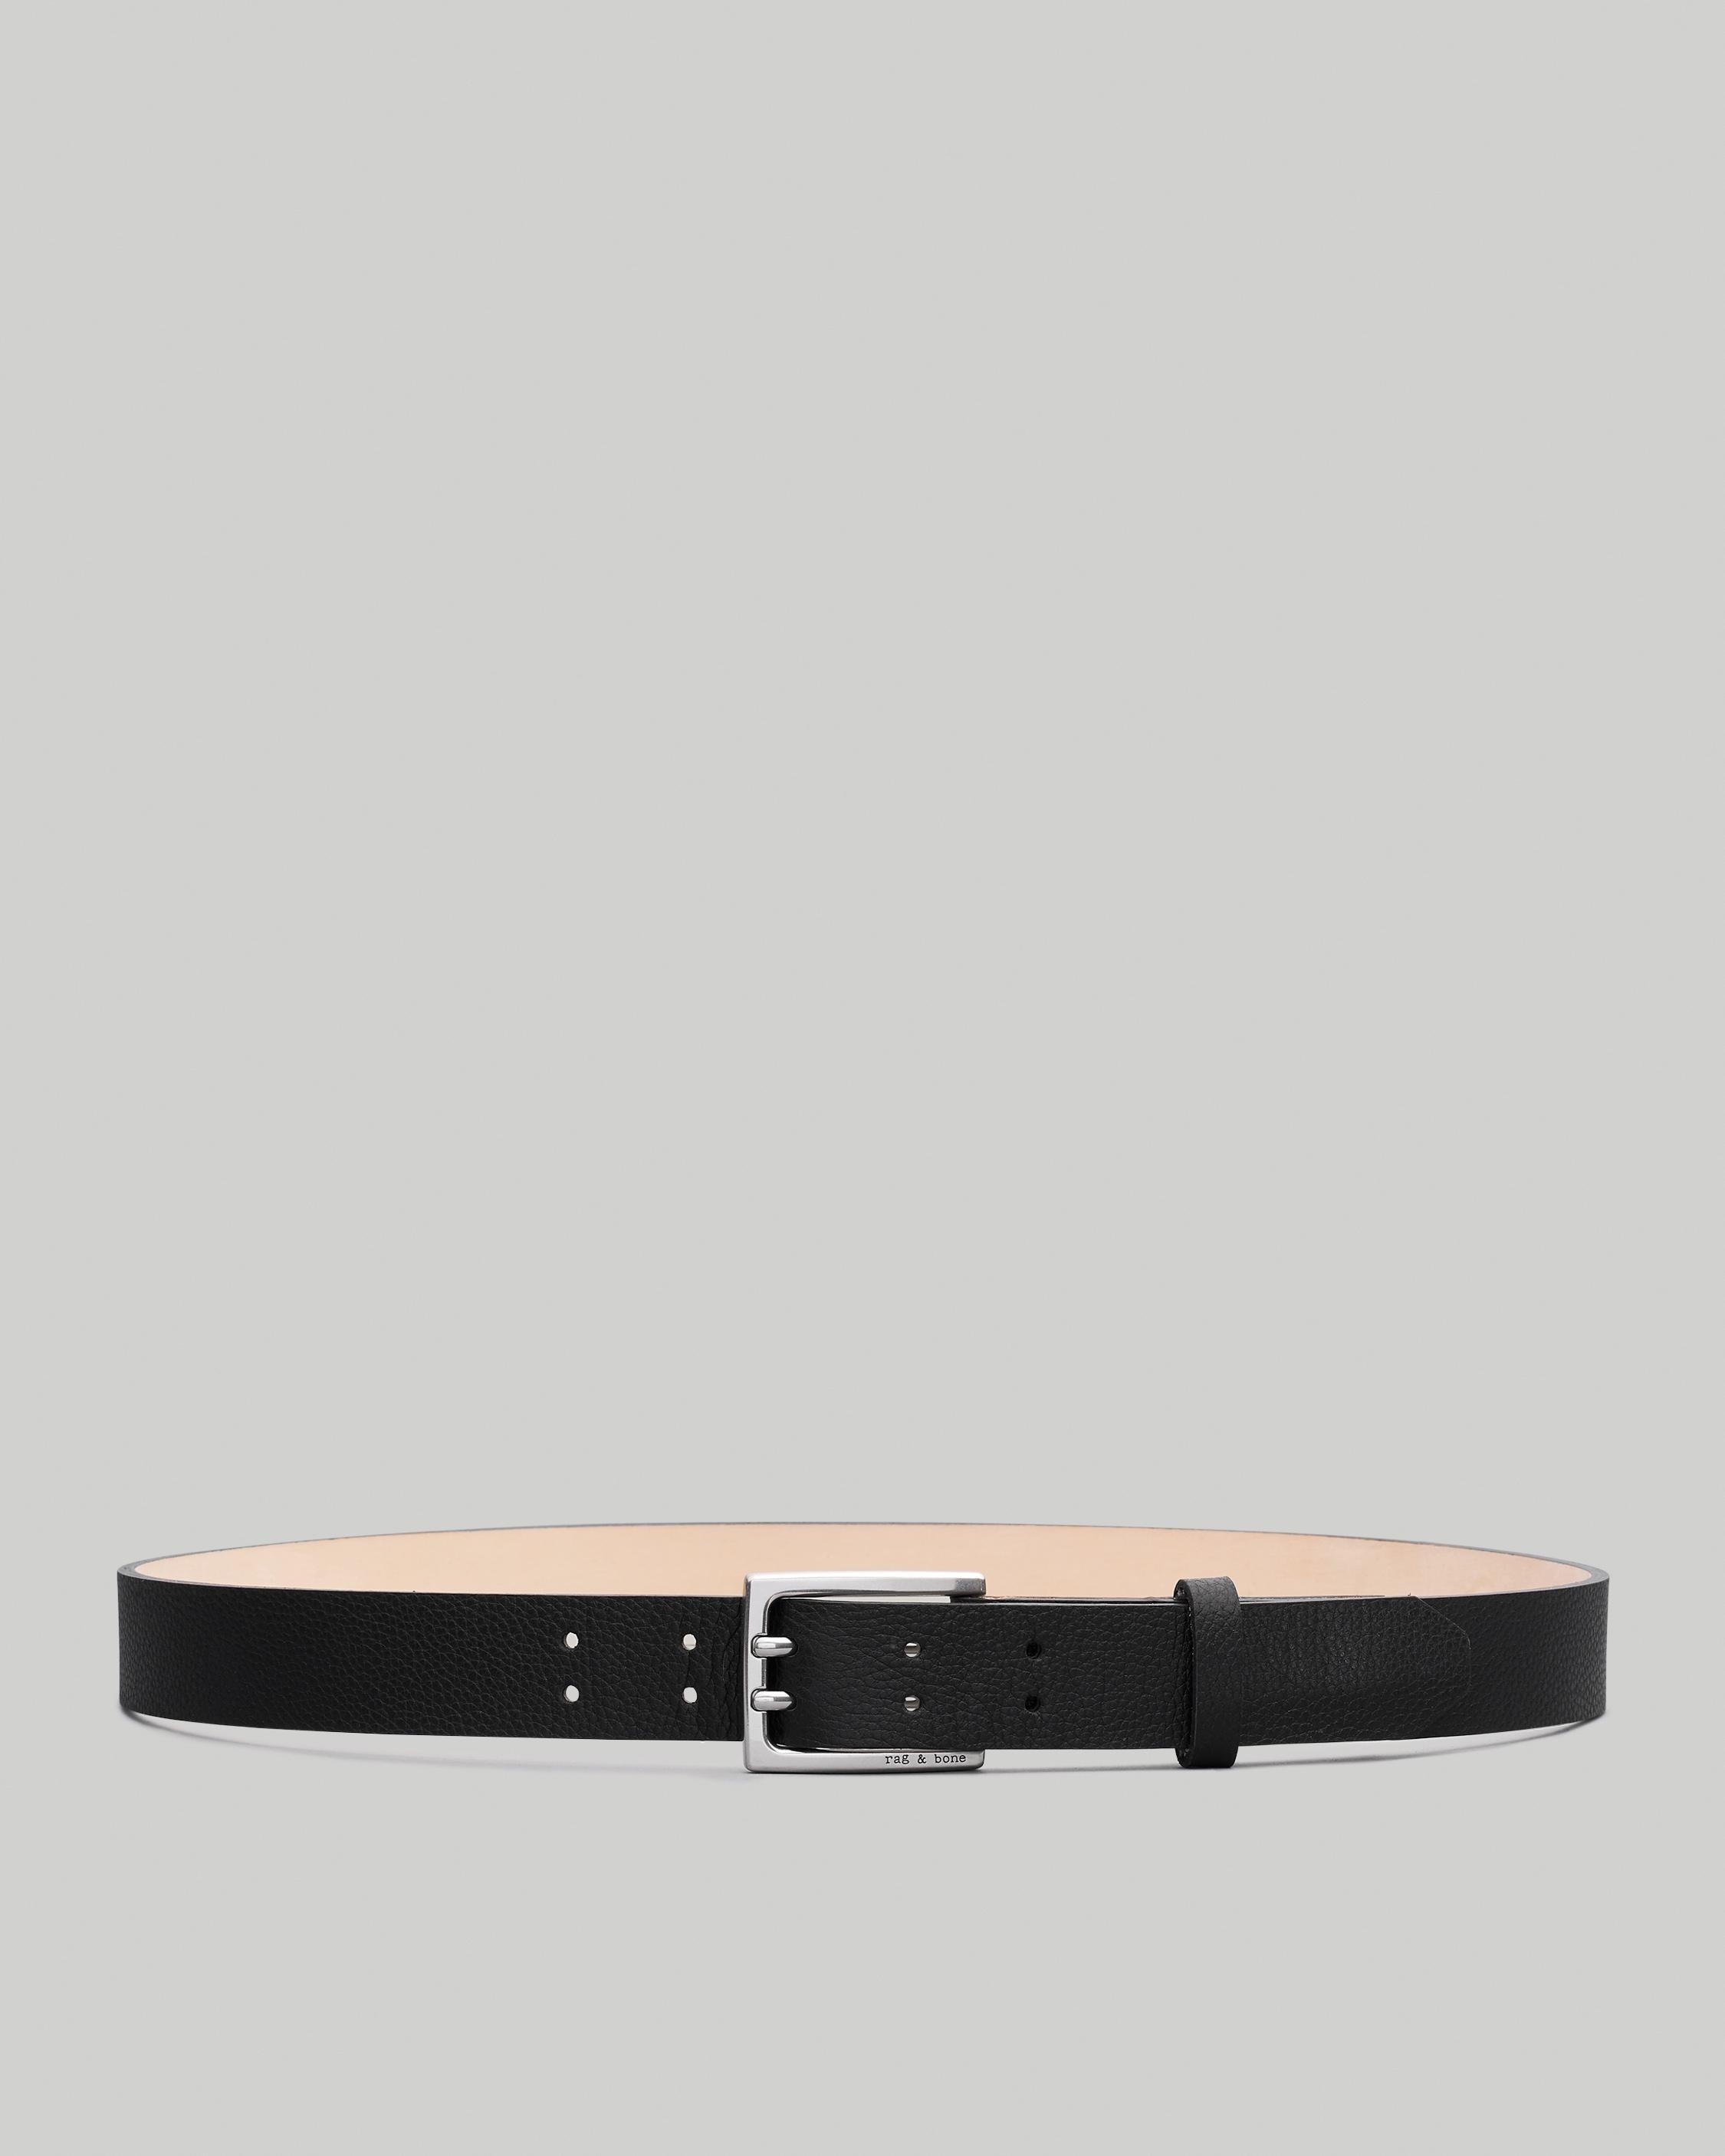 Escape Belt
Leather 32mm Belt - 1